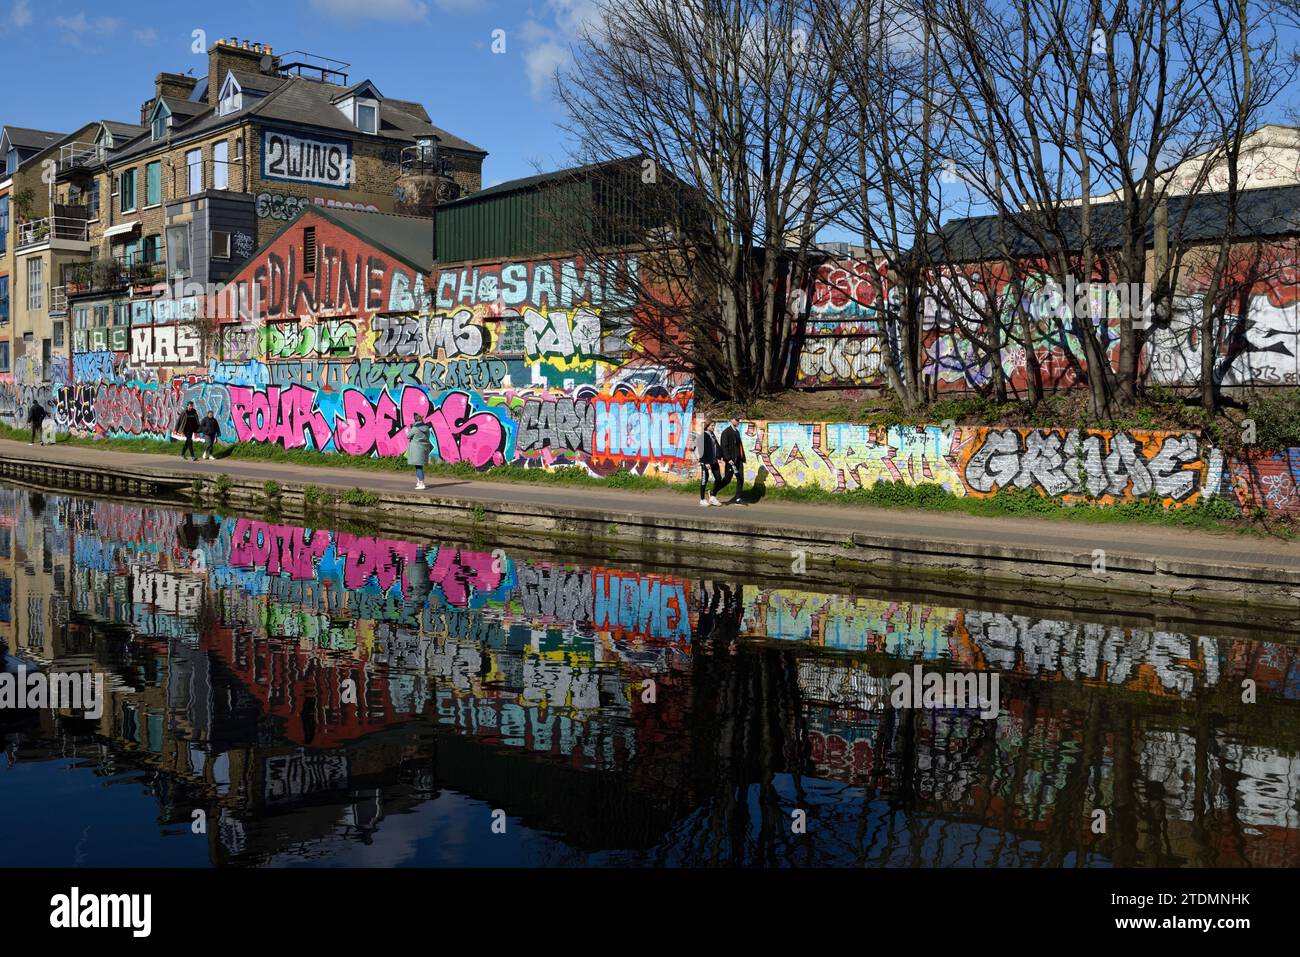 Regents canal towpath, Cambridge Heath, Hoxton, Bethnal Green, Hackney, East London, United Kingdom Stock Photo